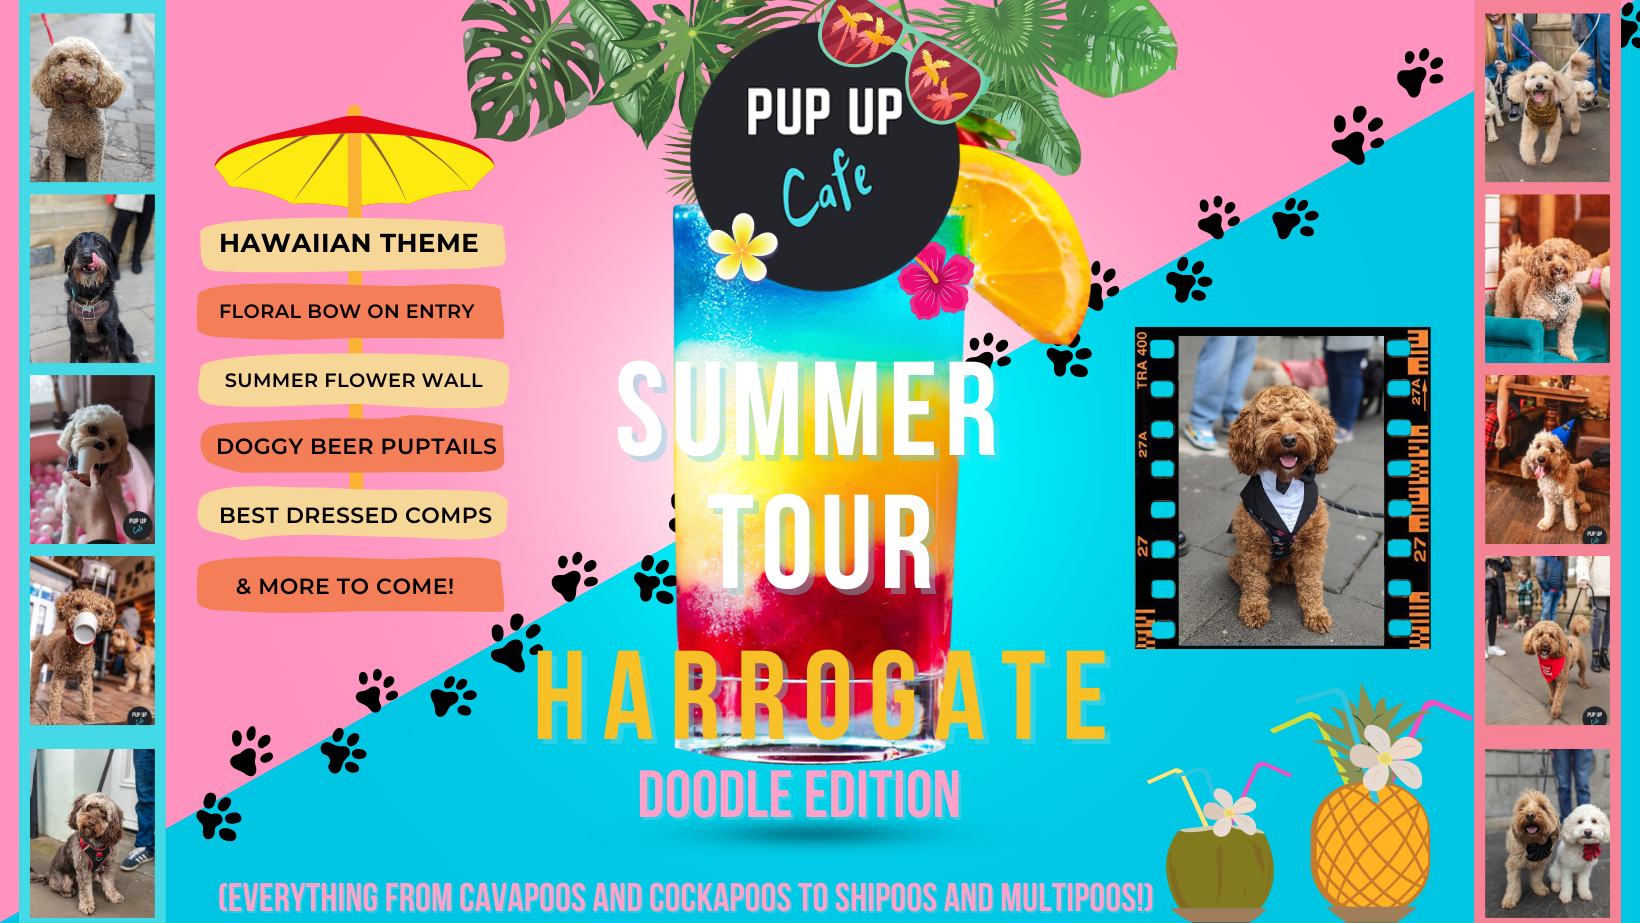 Doodle Pup Up Cafe – Harrogate | SUMMER TOUR! 🌞